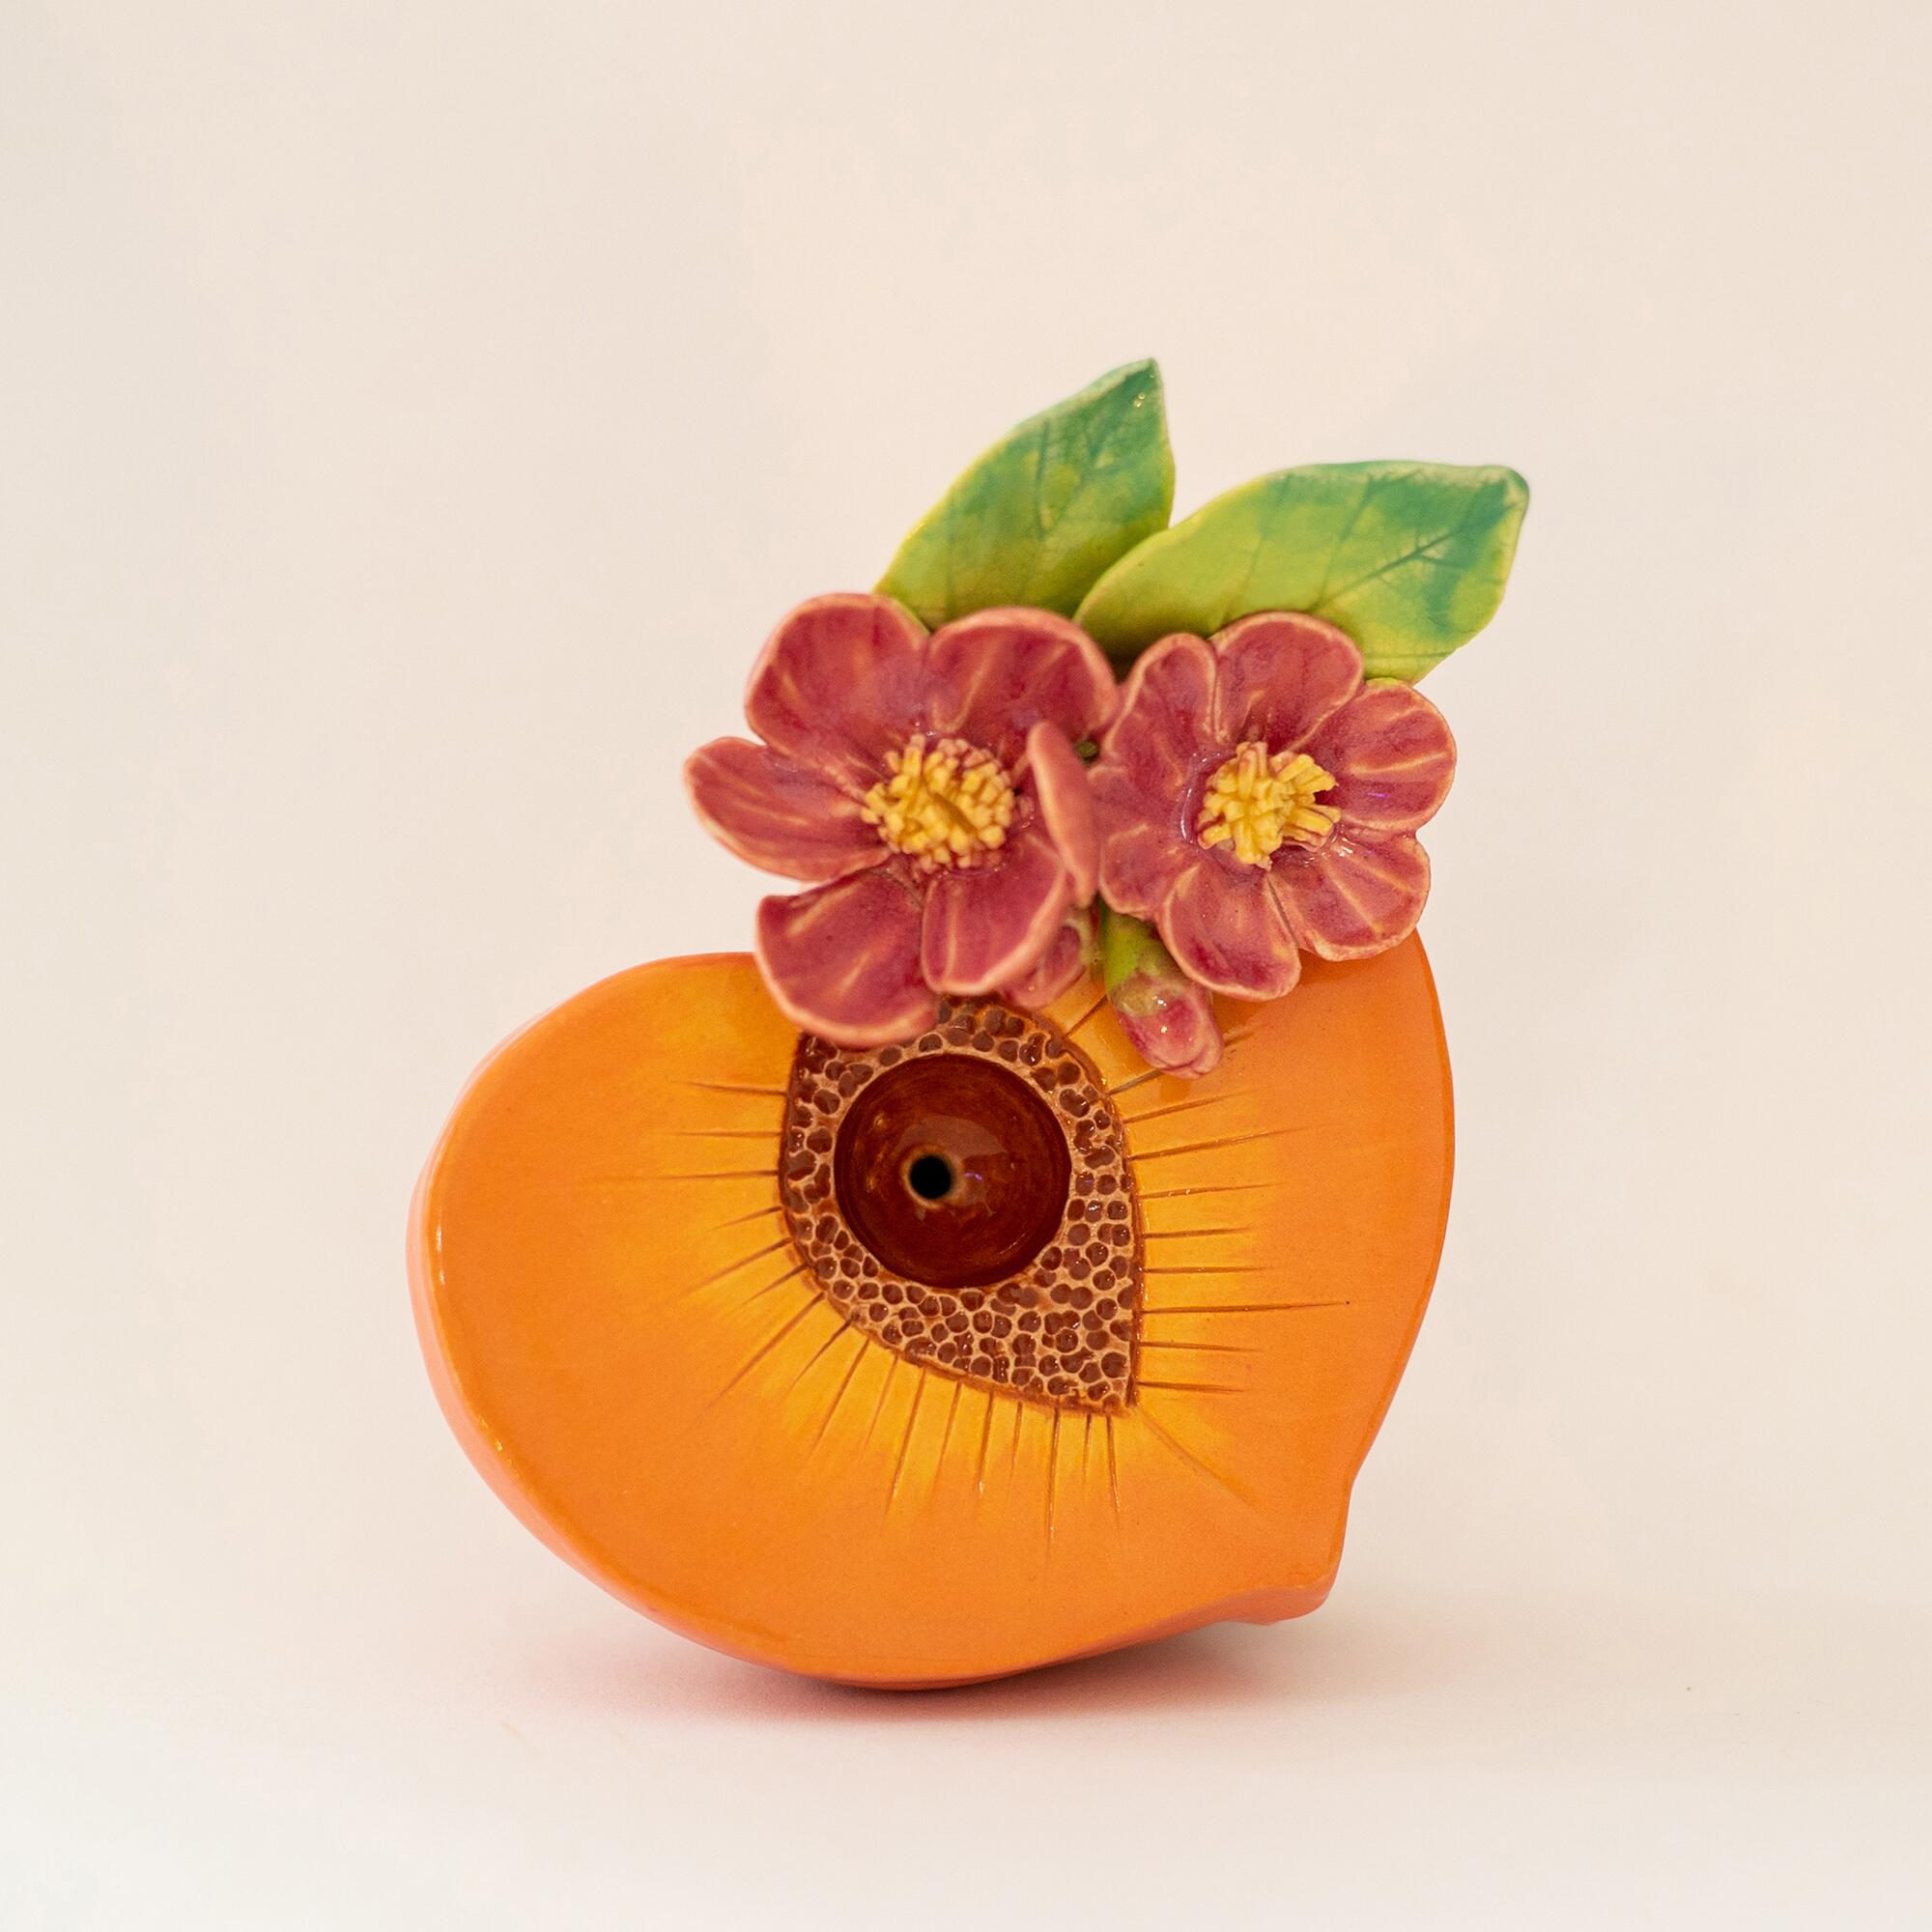 Cheeky Peach Pipe from Munisa Ceramica.